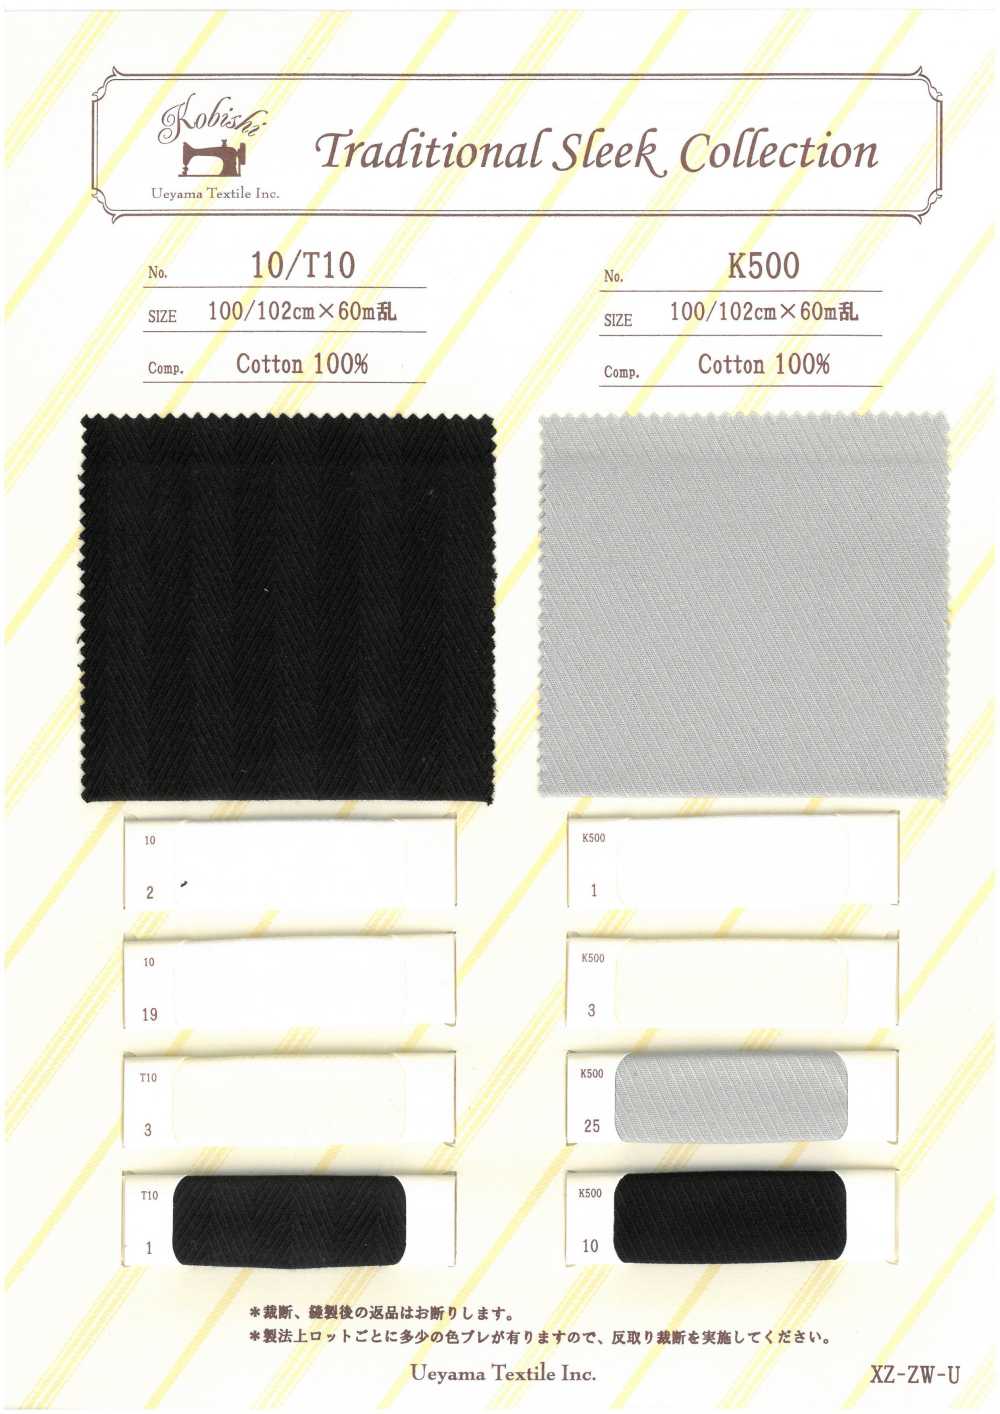 K500 Vải Lót Túi Dệt Xương Cá Kiểu Pháp Ueyama Textile